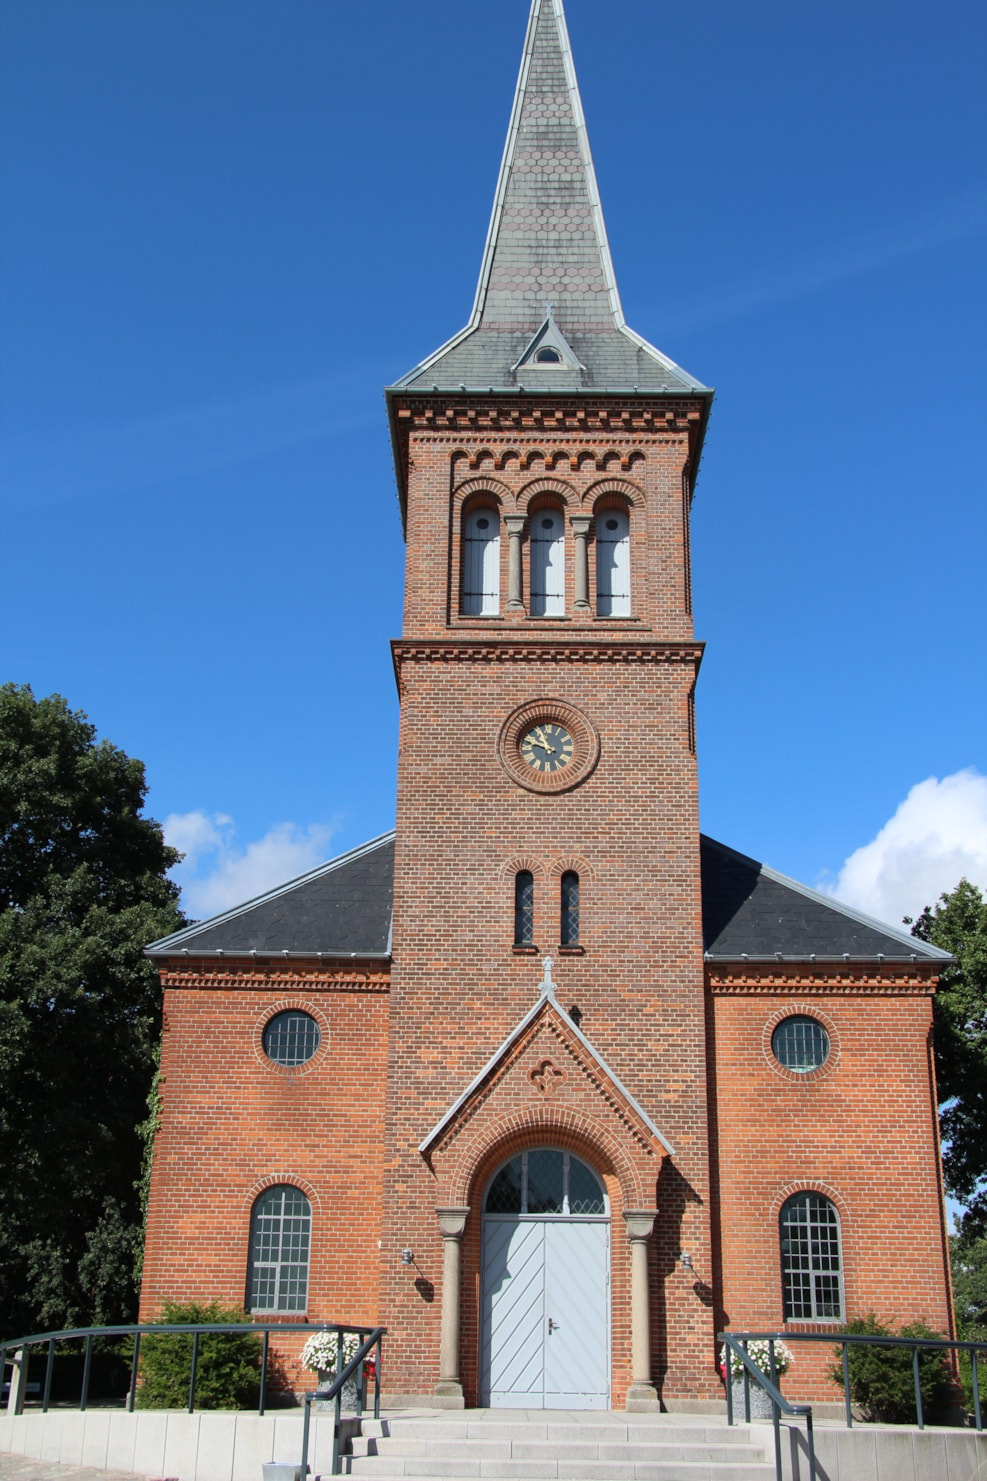 Egebæksvang Church